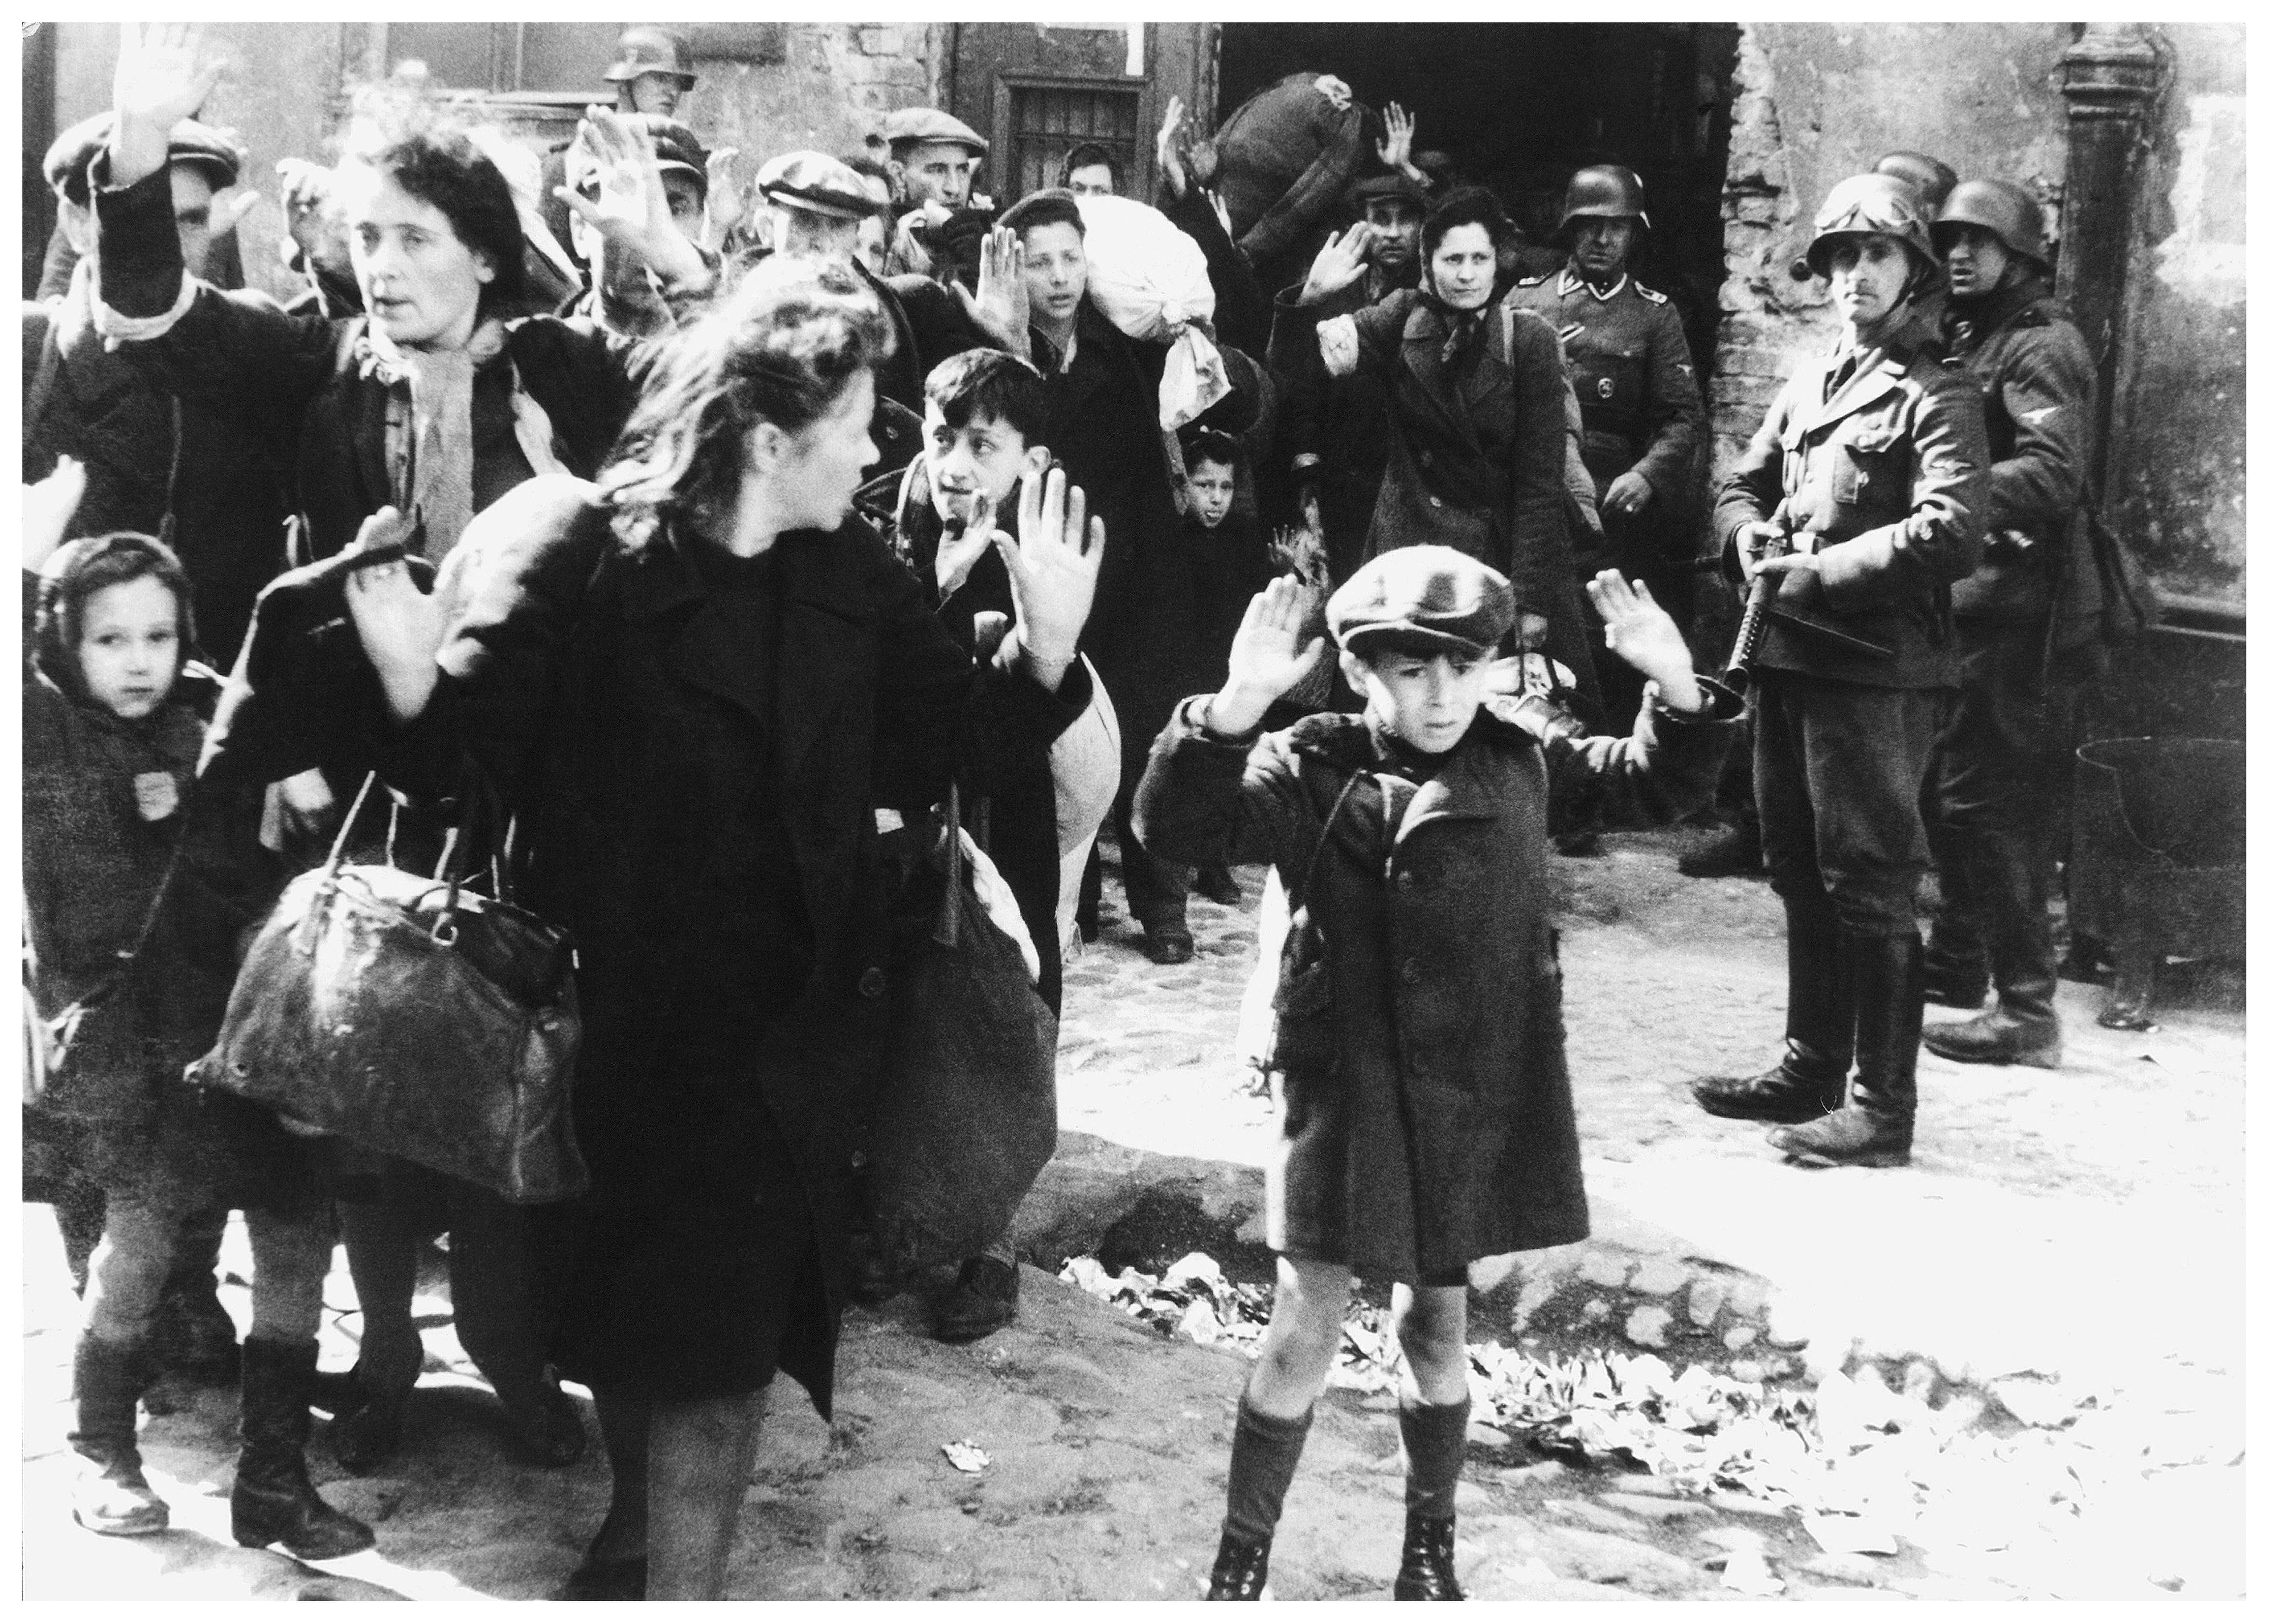 Holocaust; World war two: Warsaw Jews at gunpoint. SS troops look on. Warsaw Ghetto 1943. WHA PUBLICATIONxINxGERxSUIxAUTxONLY !ACHTUNG AUFNAHMEDATUM GESCHƒTZT! Copyright: WHA UnitedArchivesWHA_068_0801

Holocaust World was Two Warsaw Jews AT gunpoint SS Troops Look ON Warsaw Ghetto 1943 Wha PUBLICATIONxINxGERxSUIxAUTxONLY Regard date estimated Copyright Wha UnitedArchivesWHA_068_0801